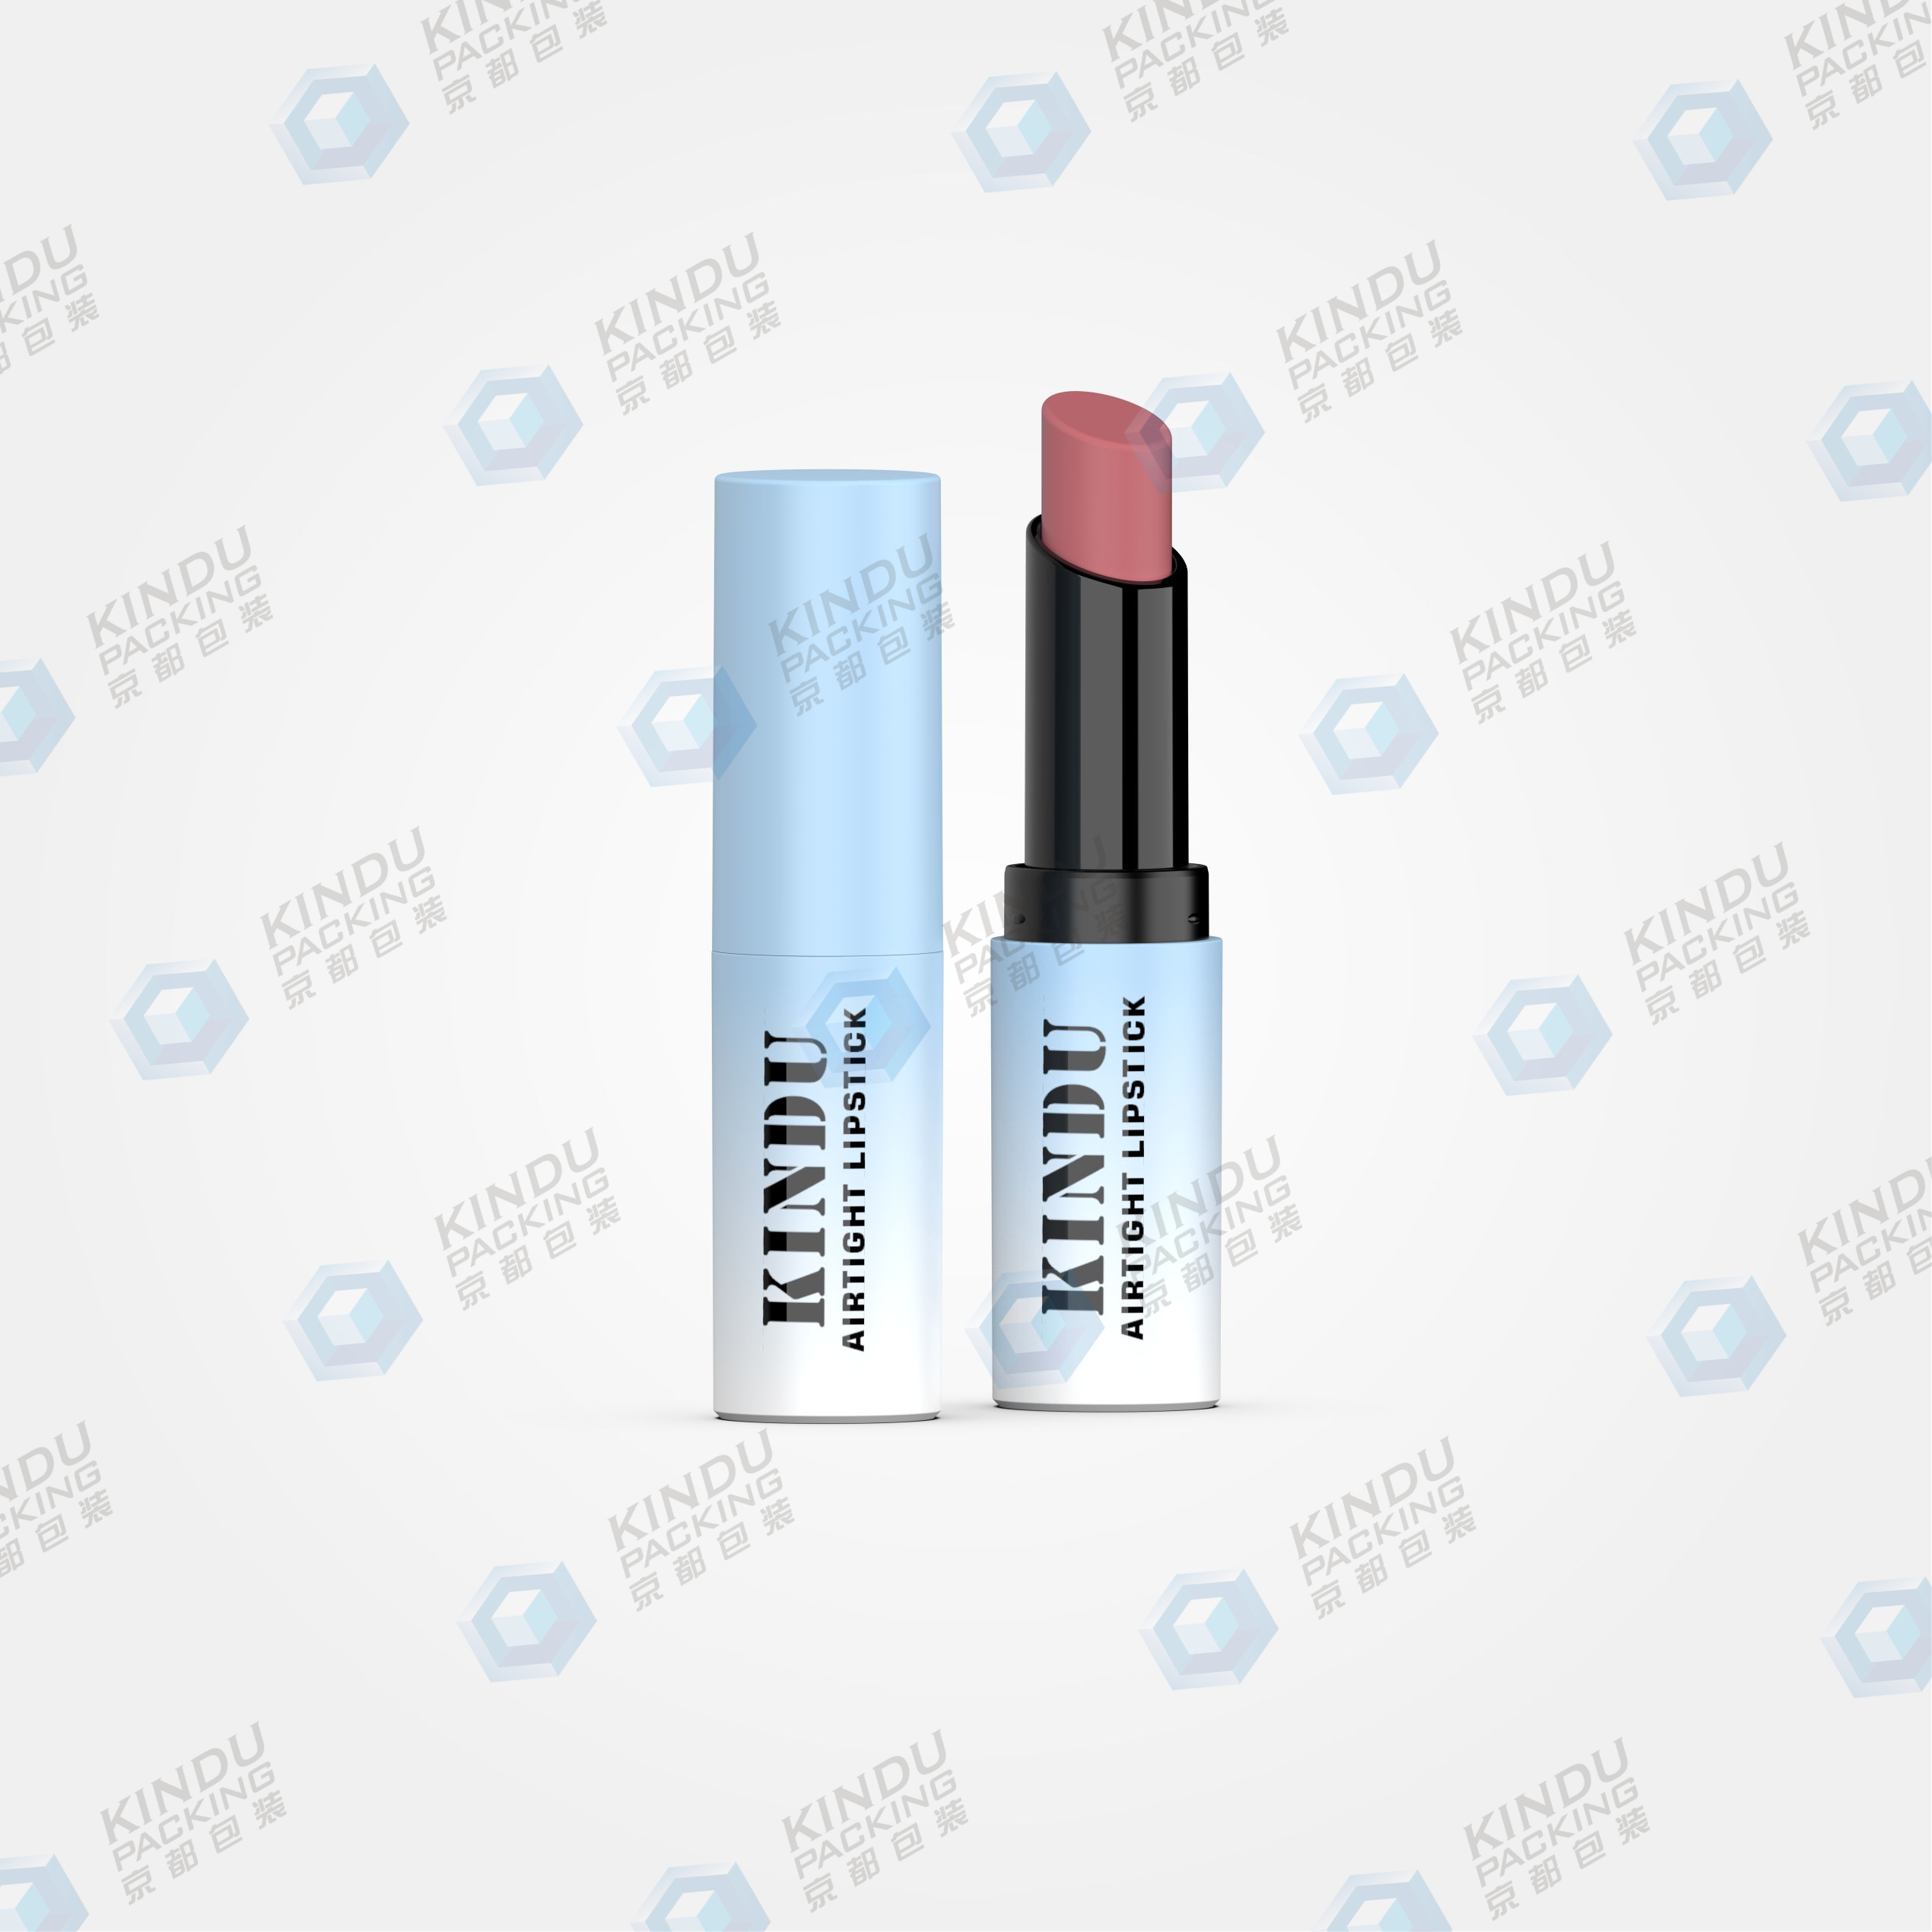 85.50 mm x 20.84 mm Airtight Lipstick Packaging (ZH-K0242)